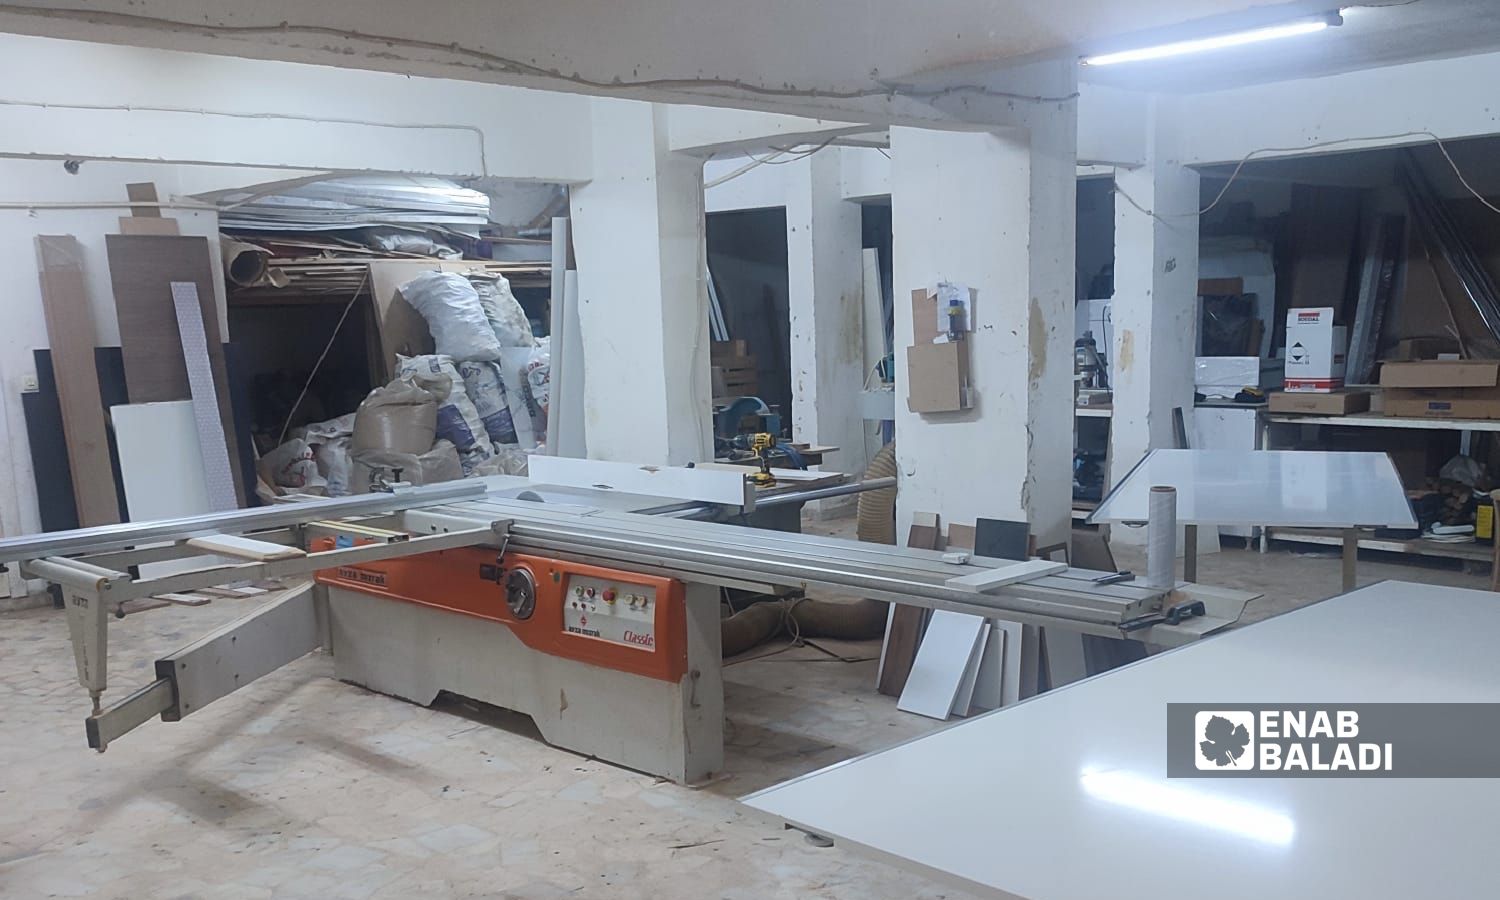 Equipment inside a furniture carpentry workshop in the Esenyurt region on the European side of Istanbul - 1 September 2022 (Enab Baladi)